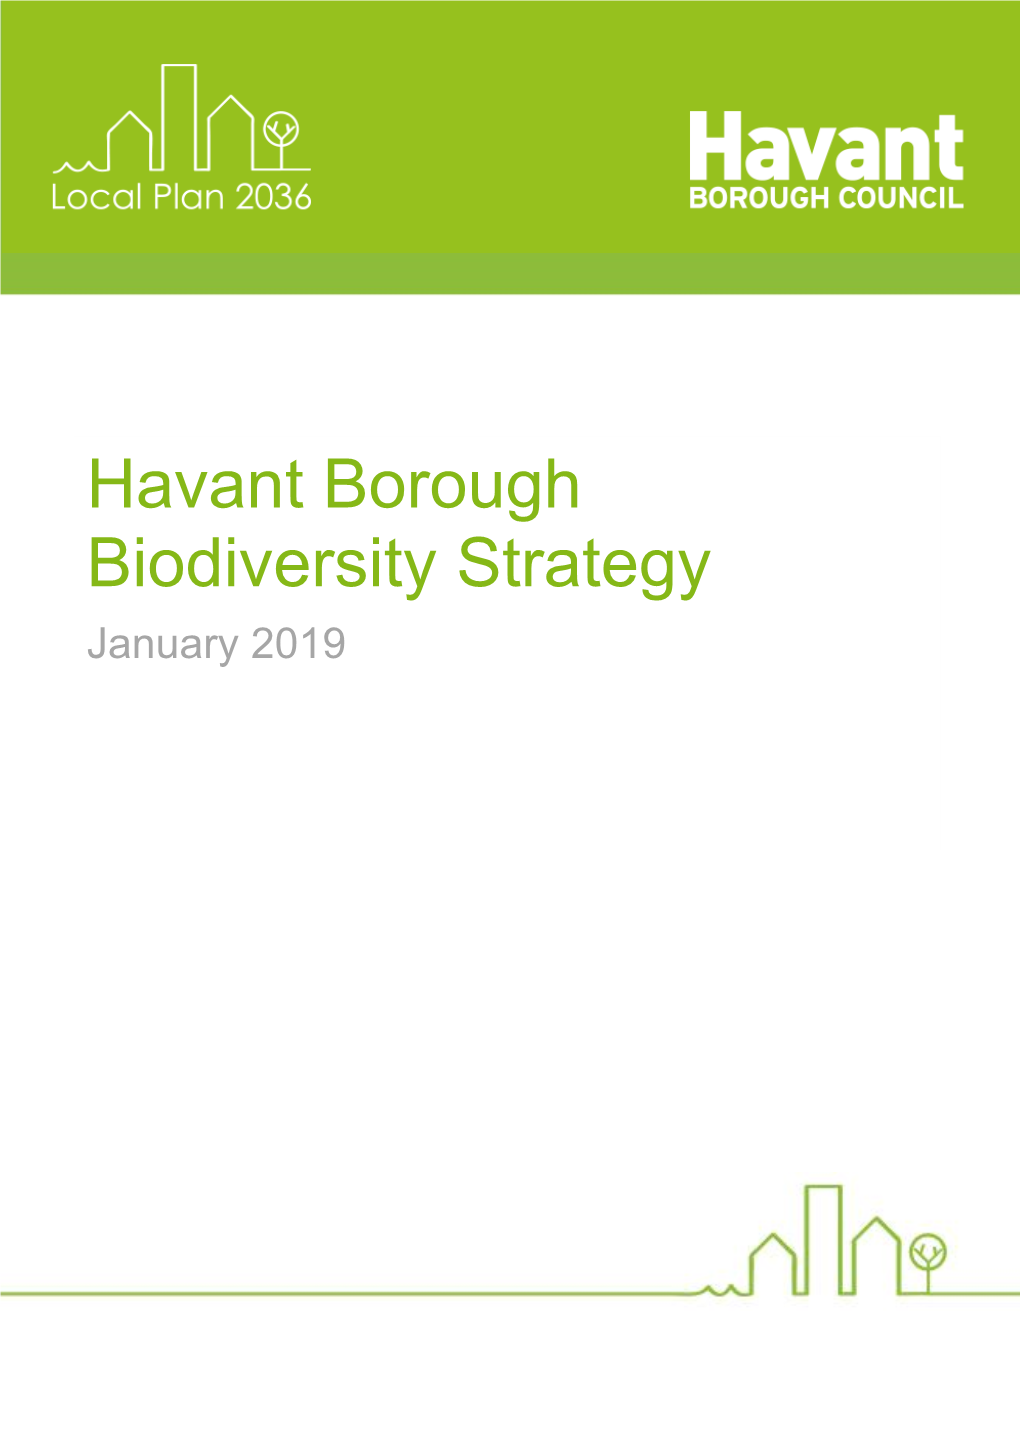 Biodiversity Strategy | January 2019